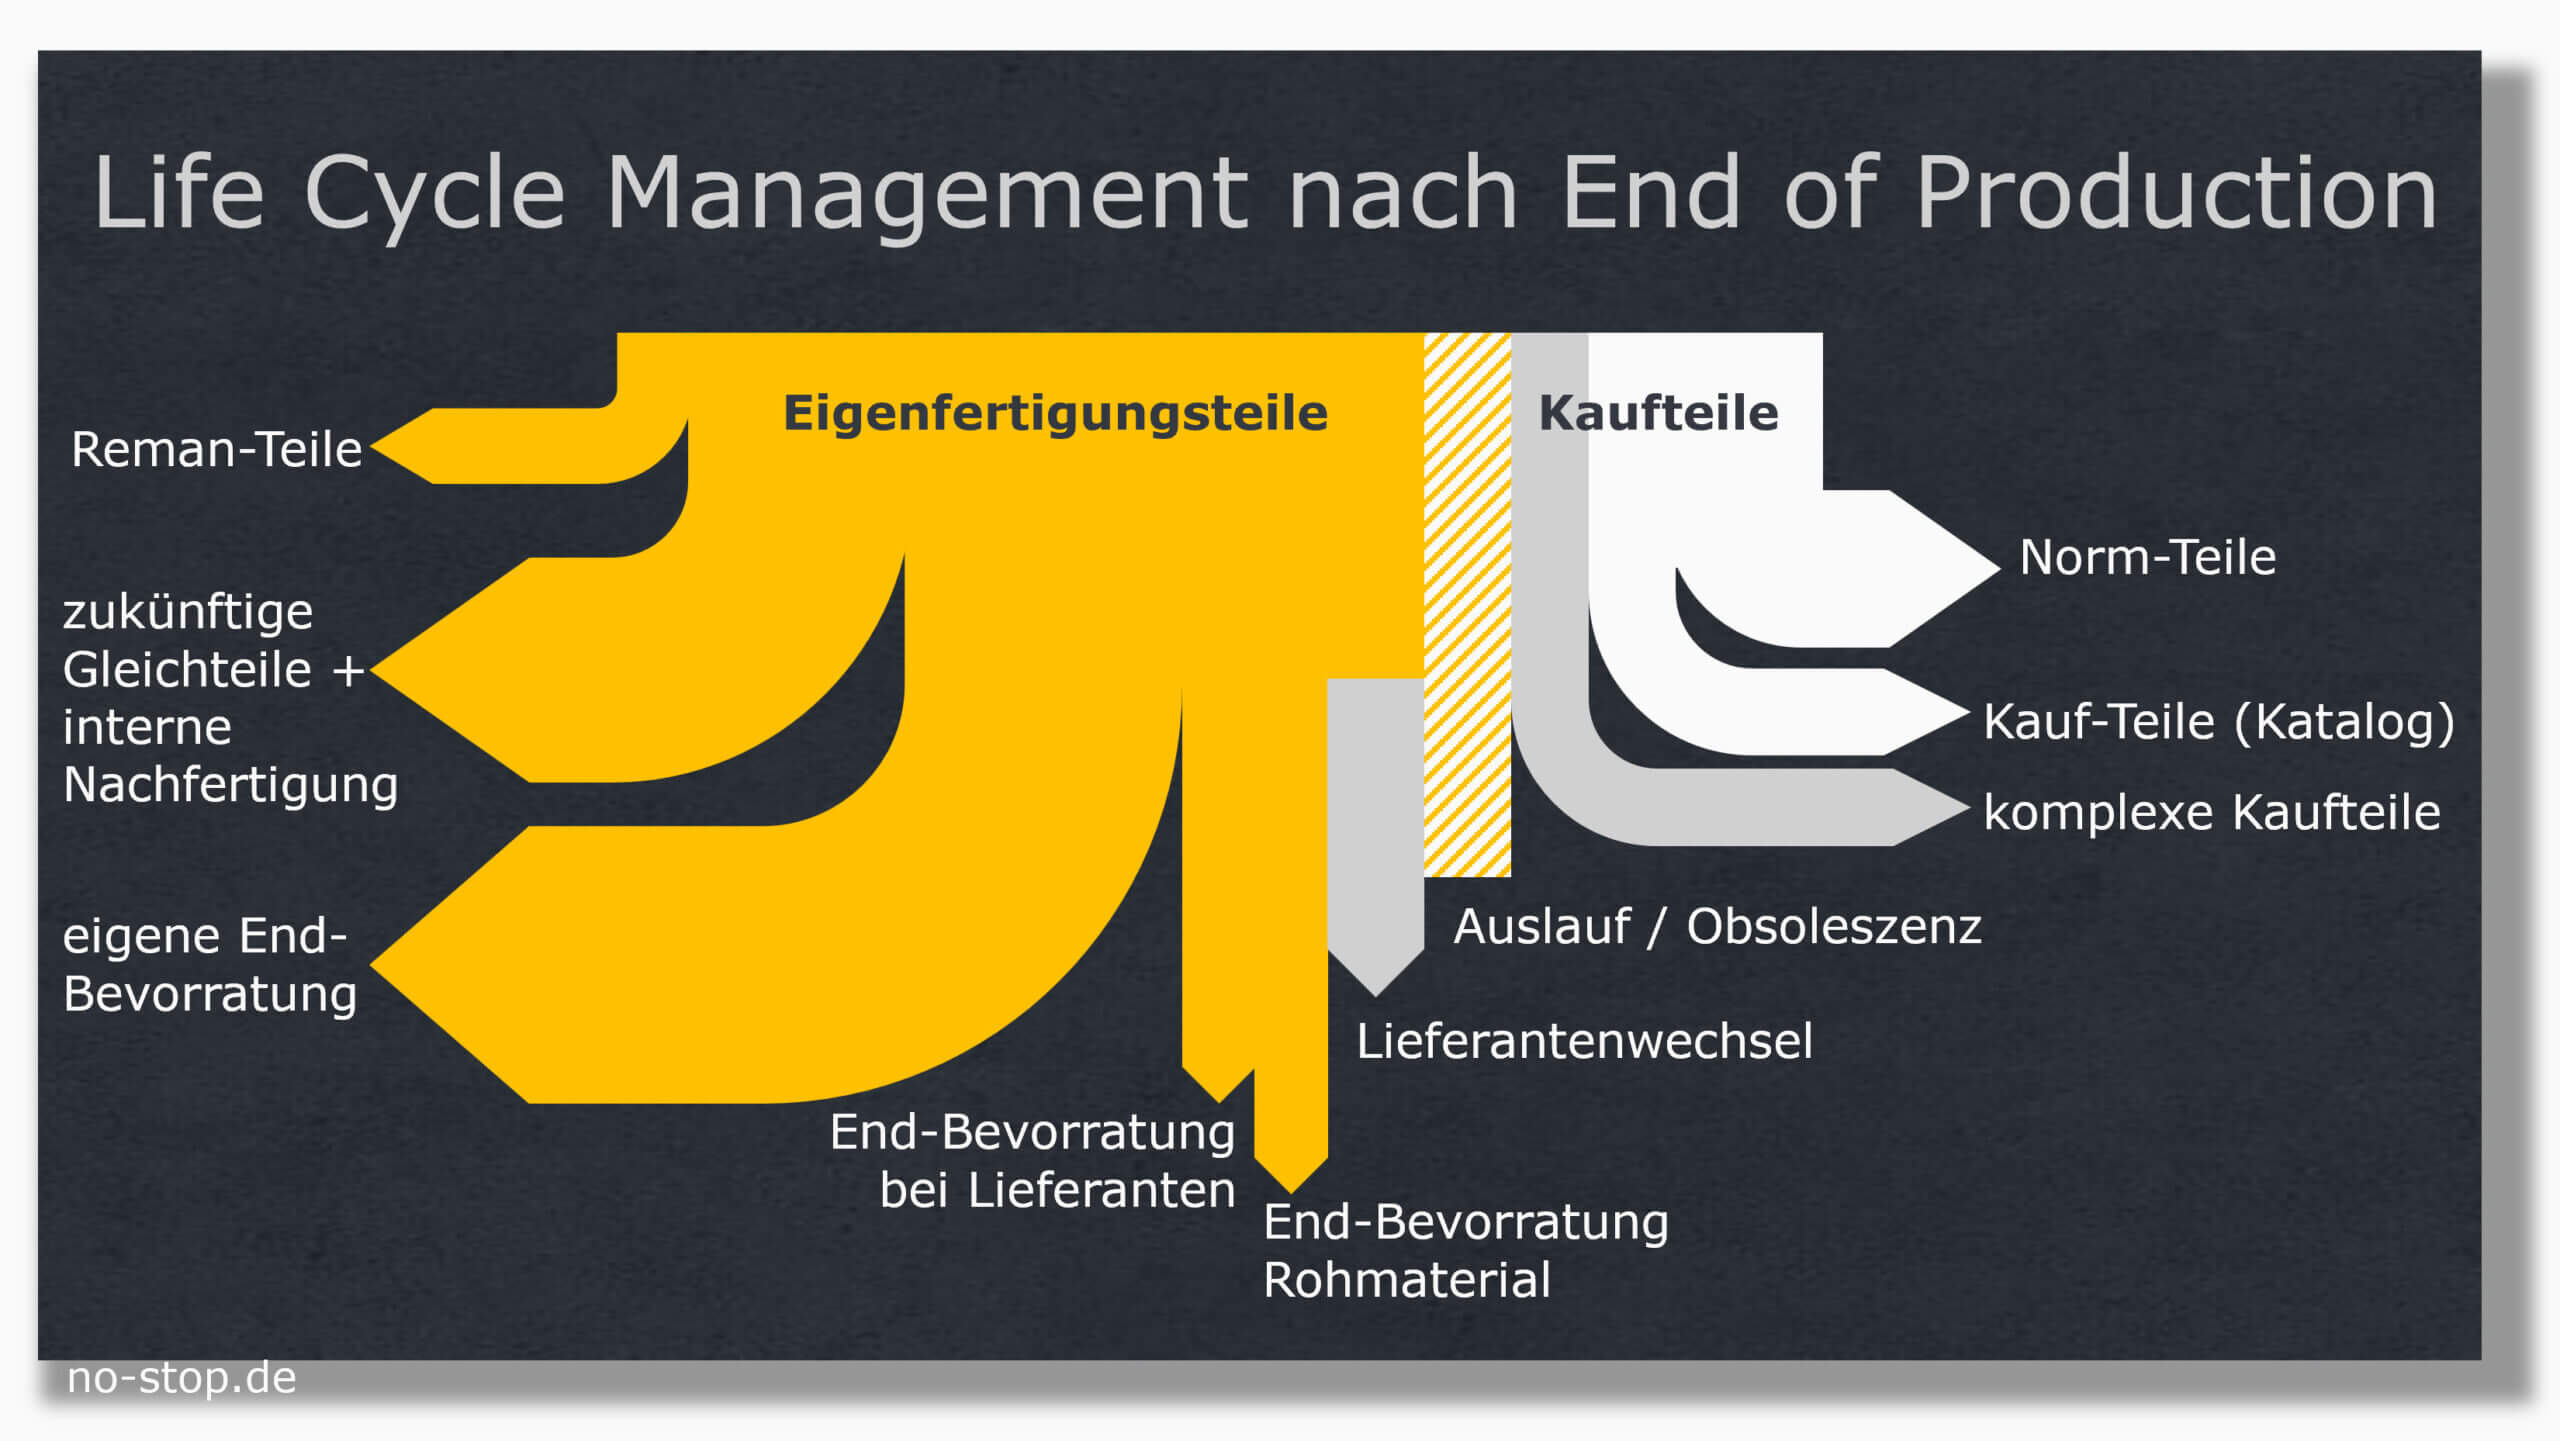 Life Cycle Management nach End of Production: mehr als Endbevorratung